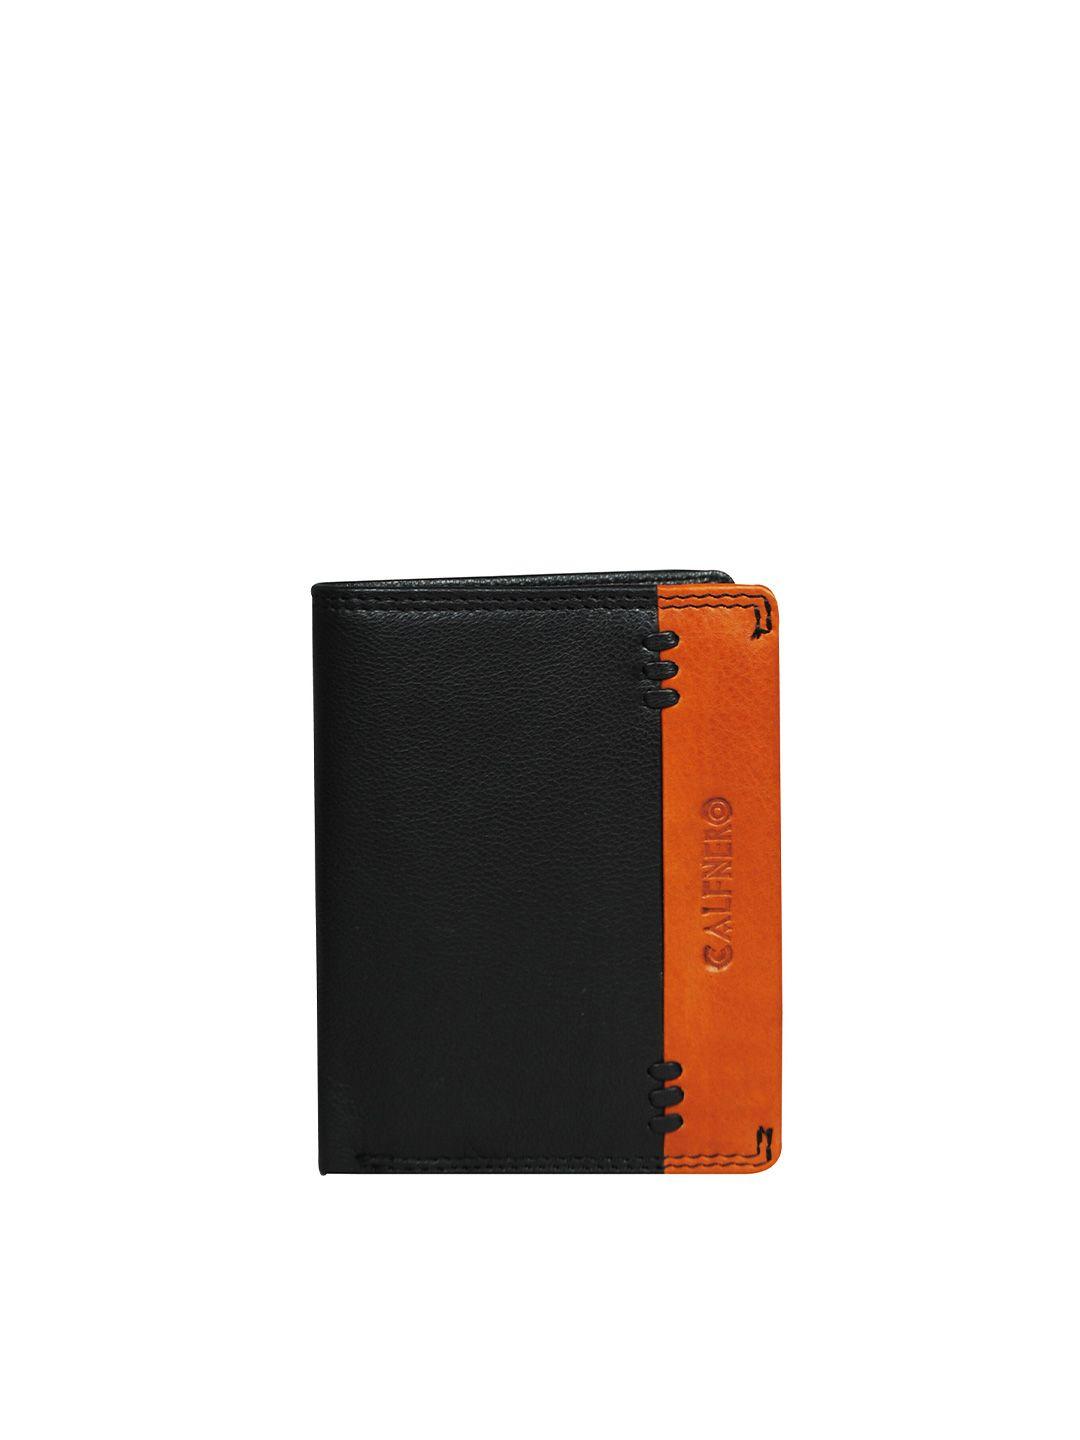 calfnero men black & tan colourblocked leather two fold wallet